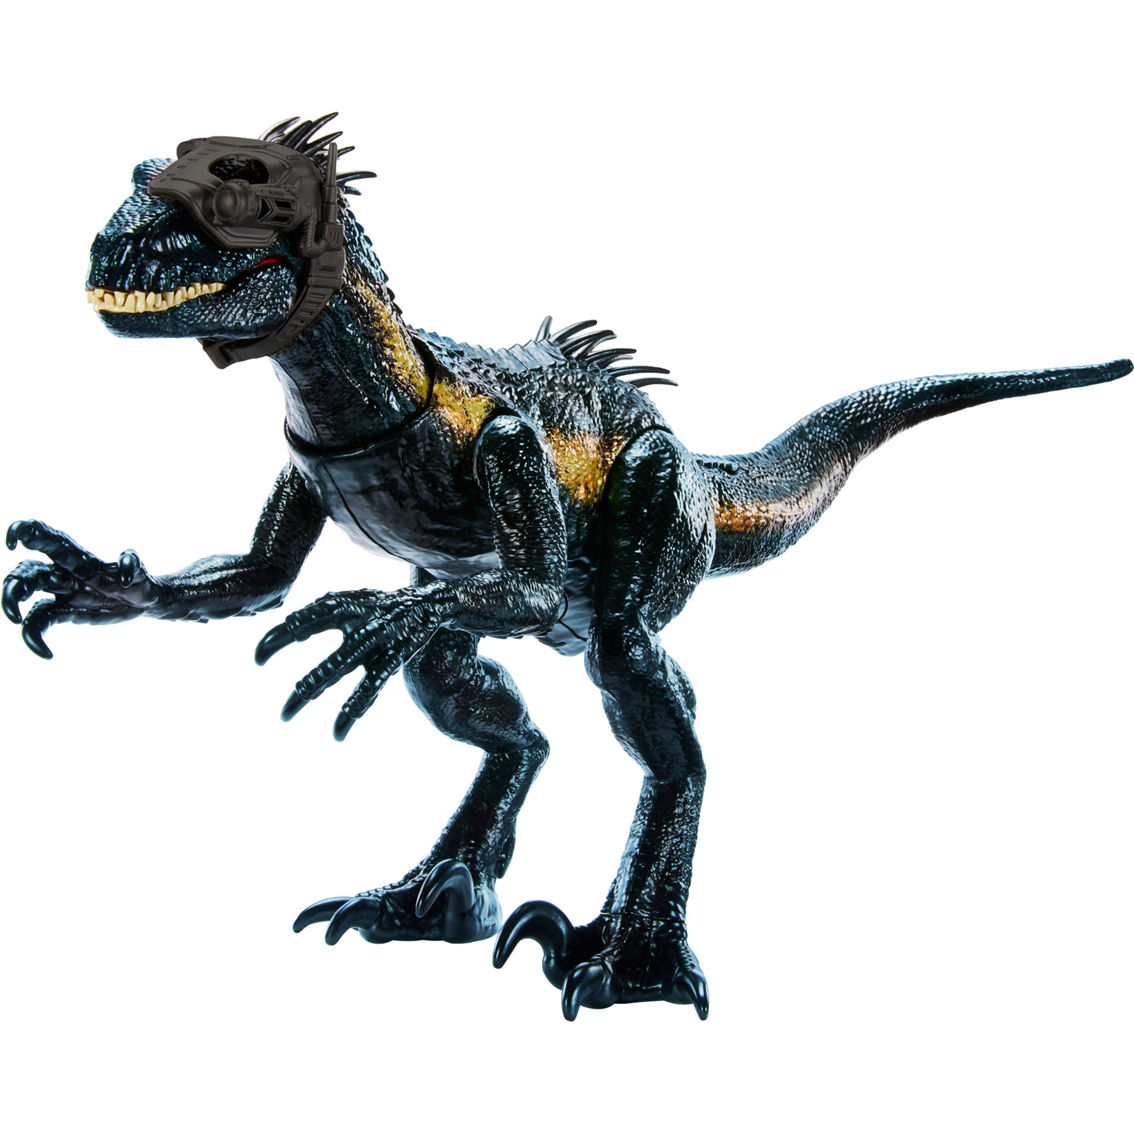 Jurassic World Fierce Changers Chase 'N Roar Tyrannosaurus Rex Toy - Image 3 of 6